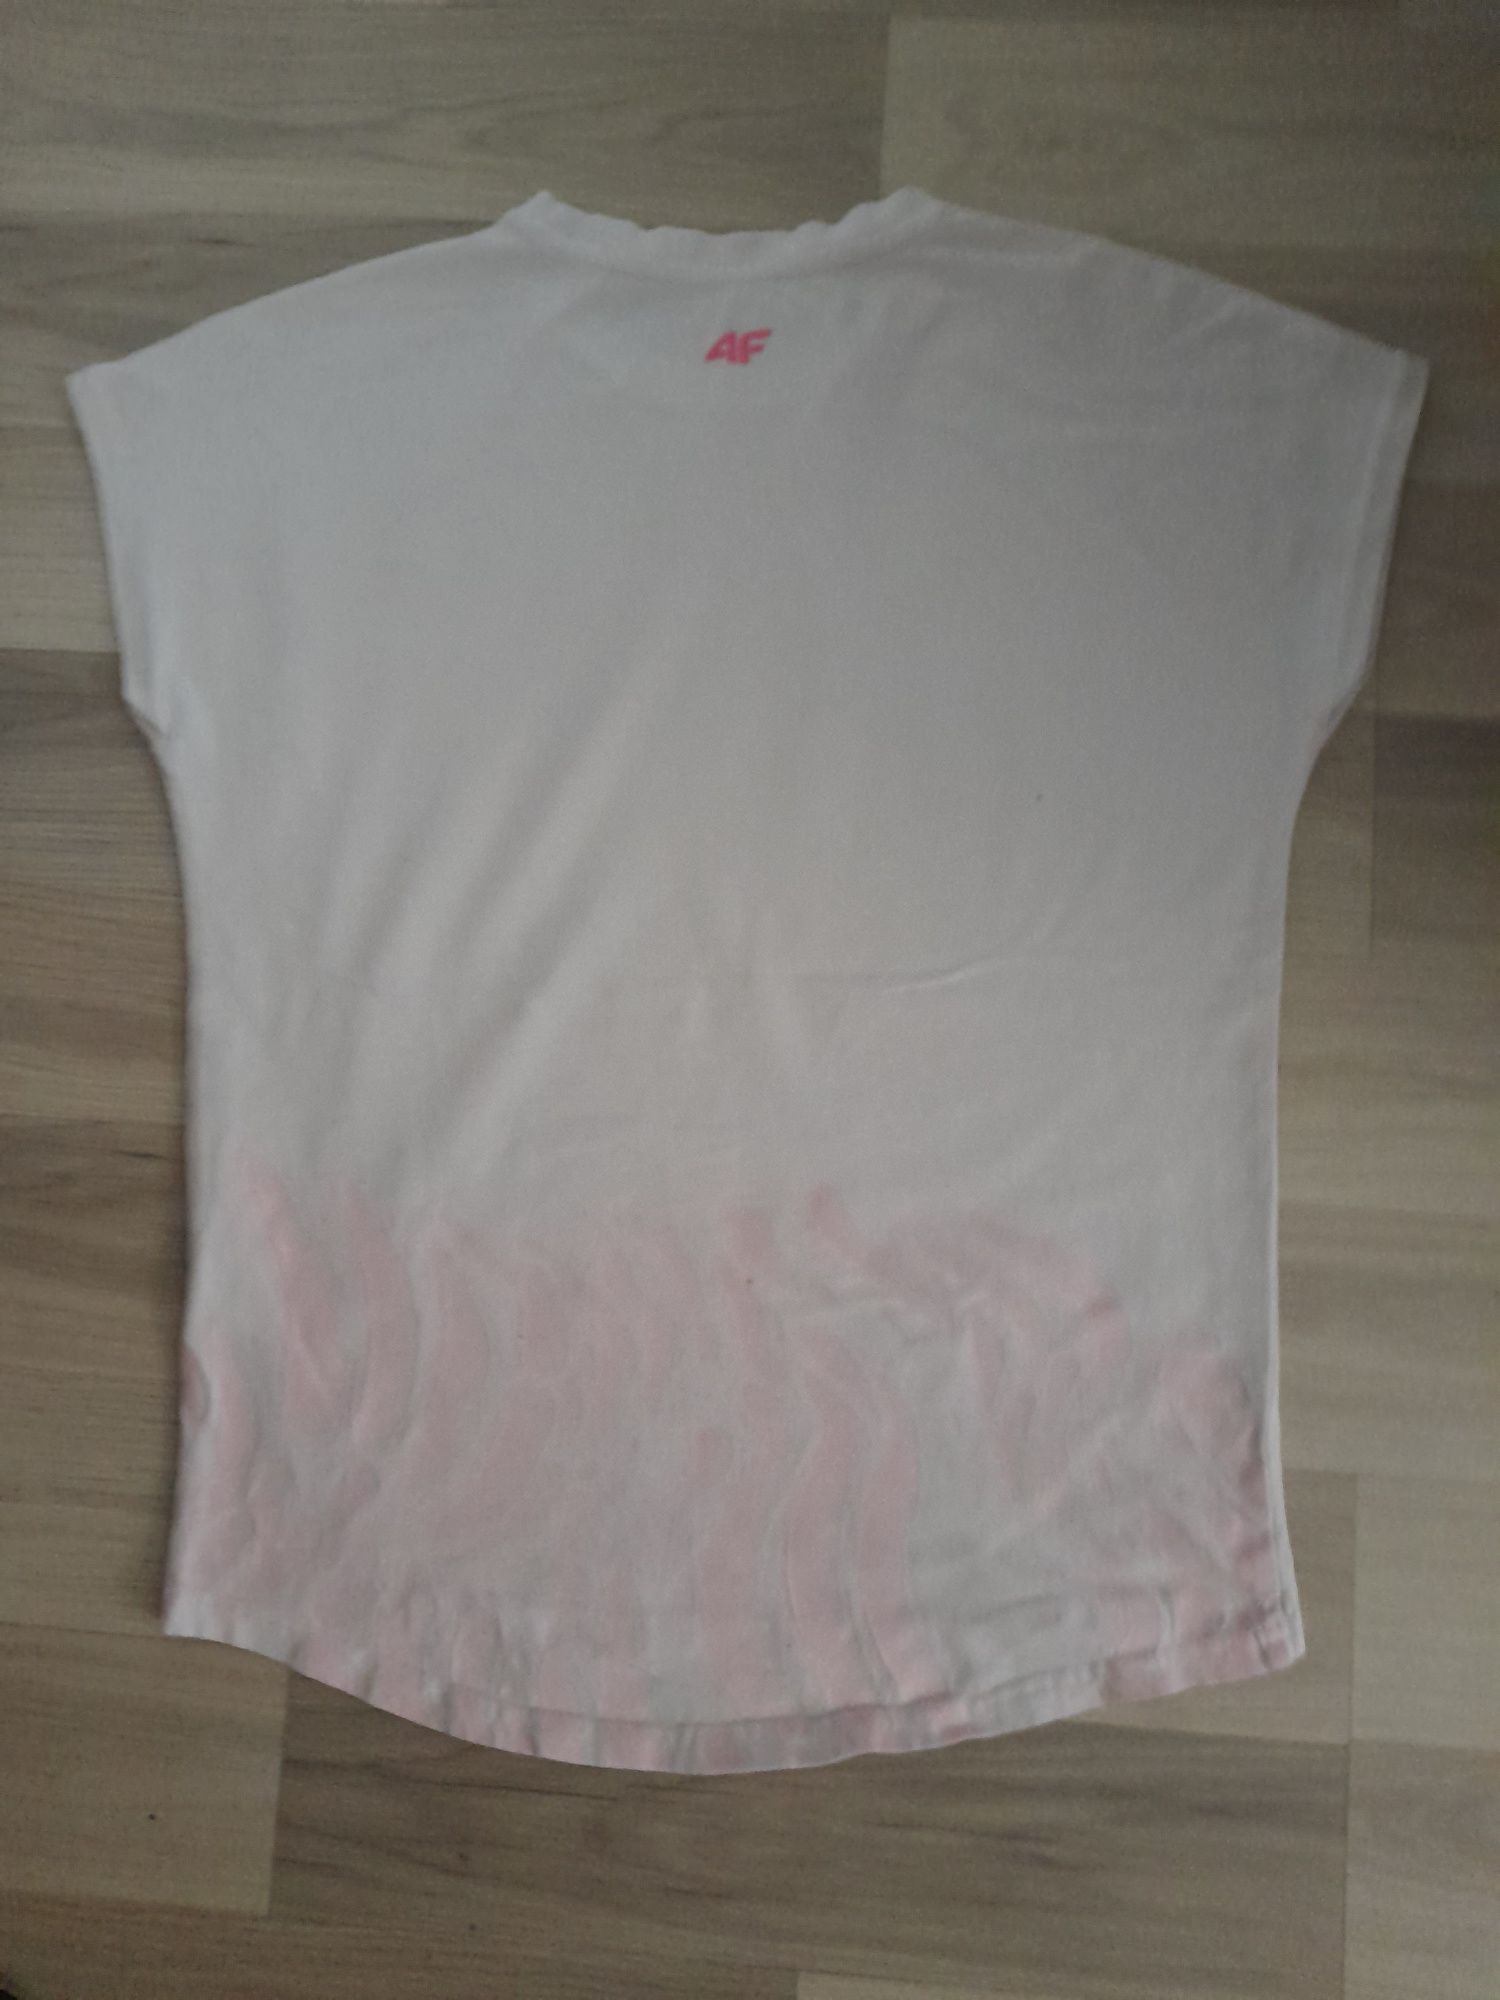 Koszulka T-Shirt rozmiar 164 cm 4F